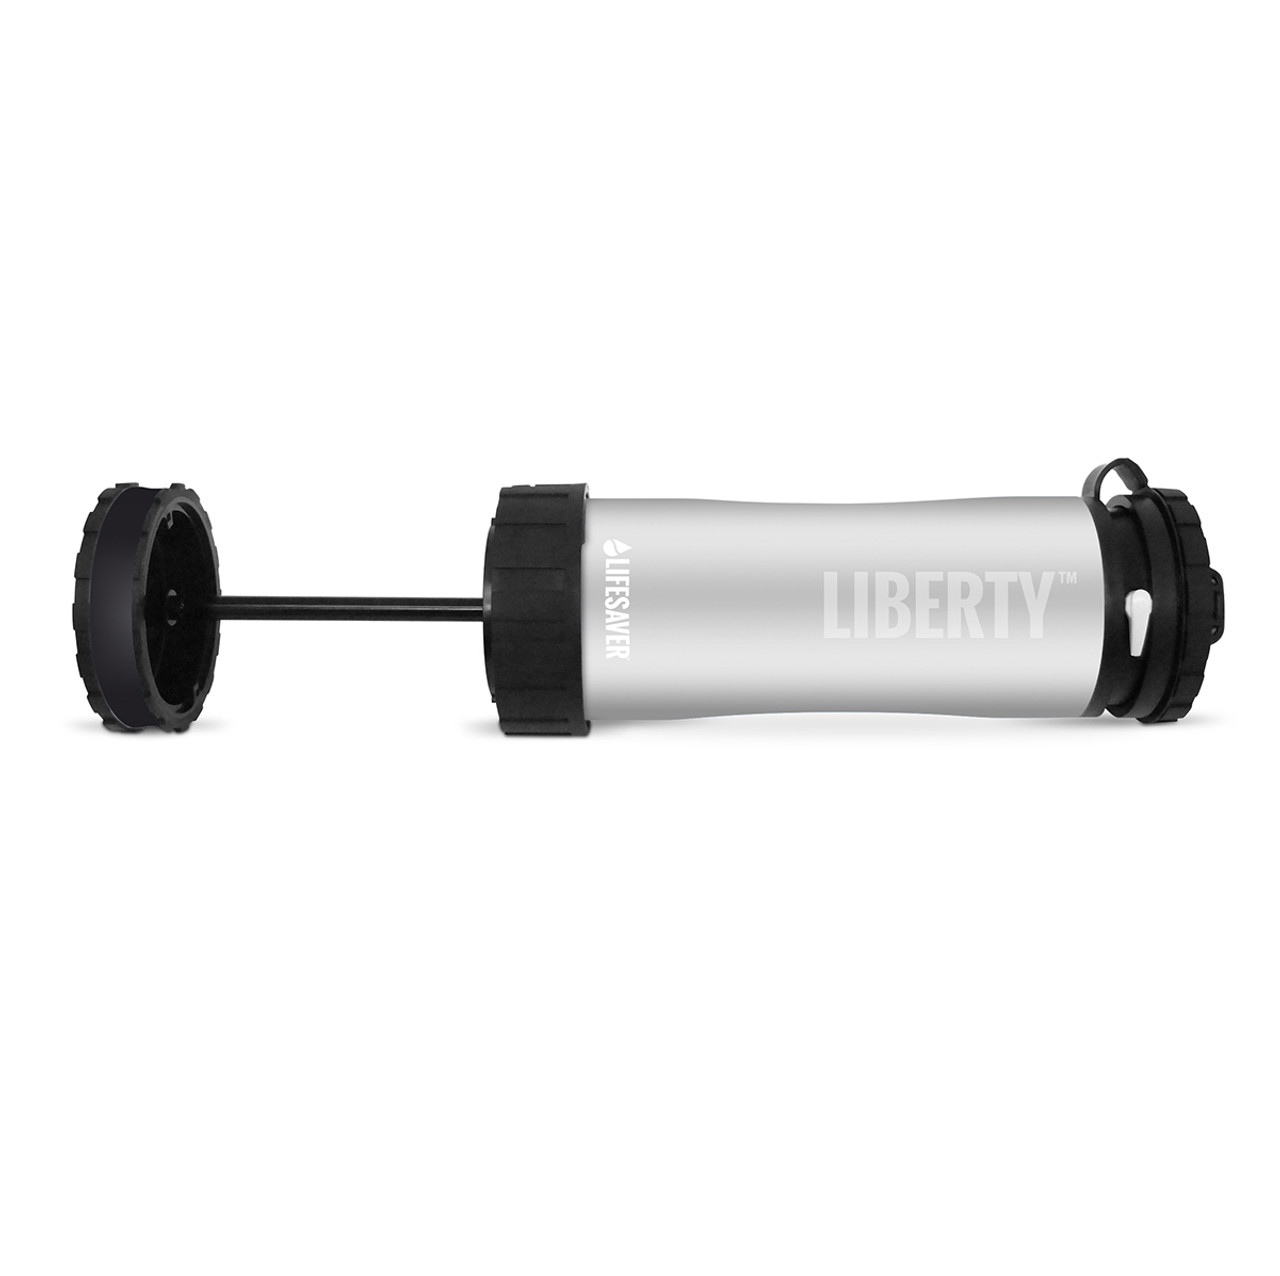 LifeSaver Liberty Portable Water Filter - Advanced Pack 